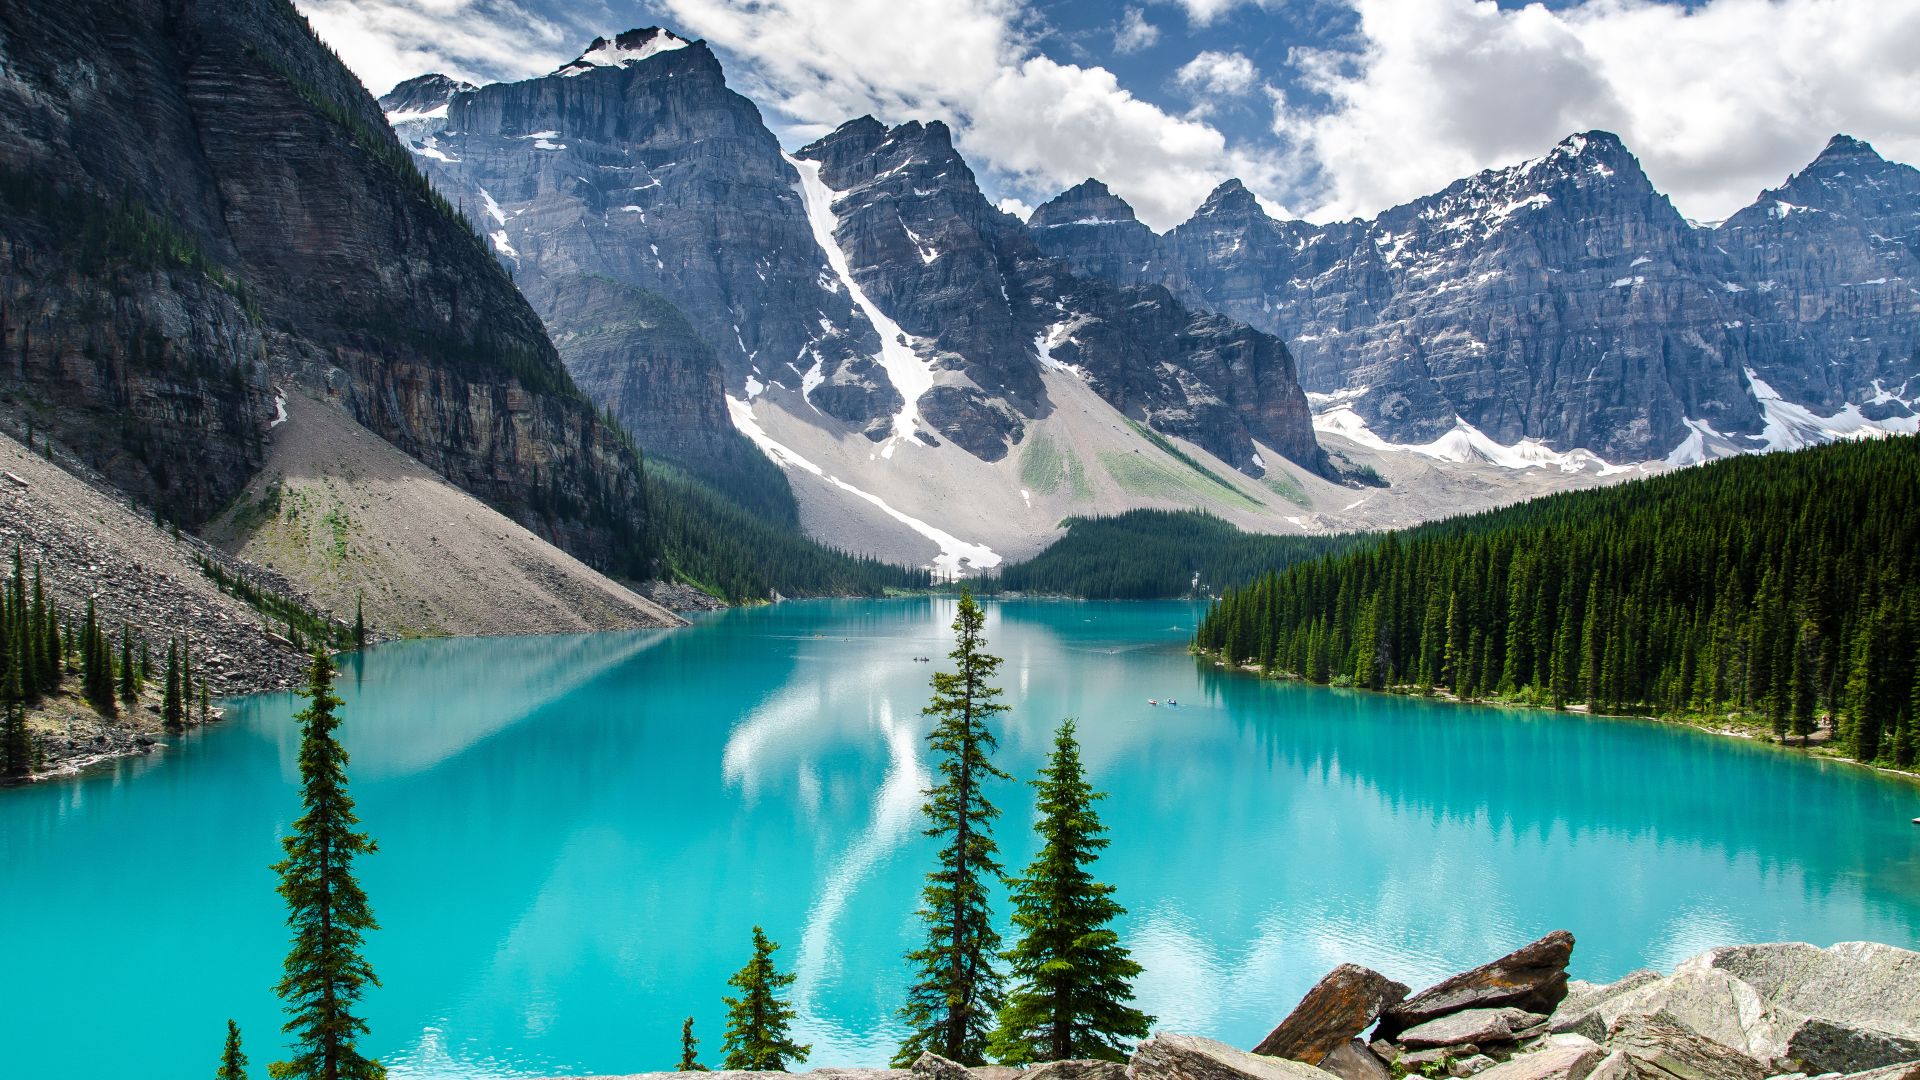 Морейн Озеро, 4k, 5k, Канада, горы, озеро, Moraine Lake, 4k, 5k wallpaper, Canada, mountains, lake (horizontal)